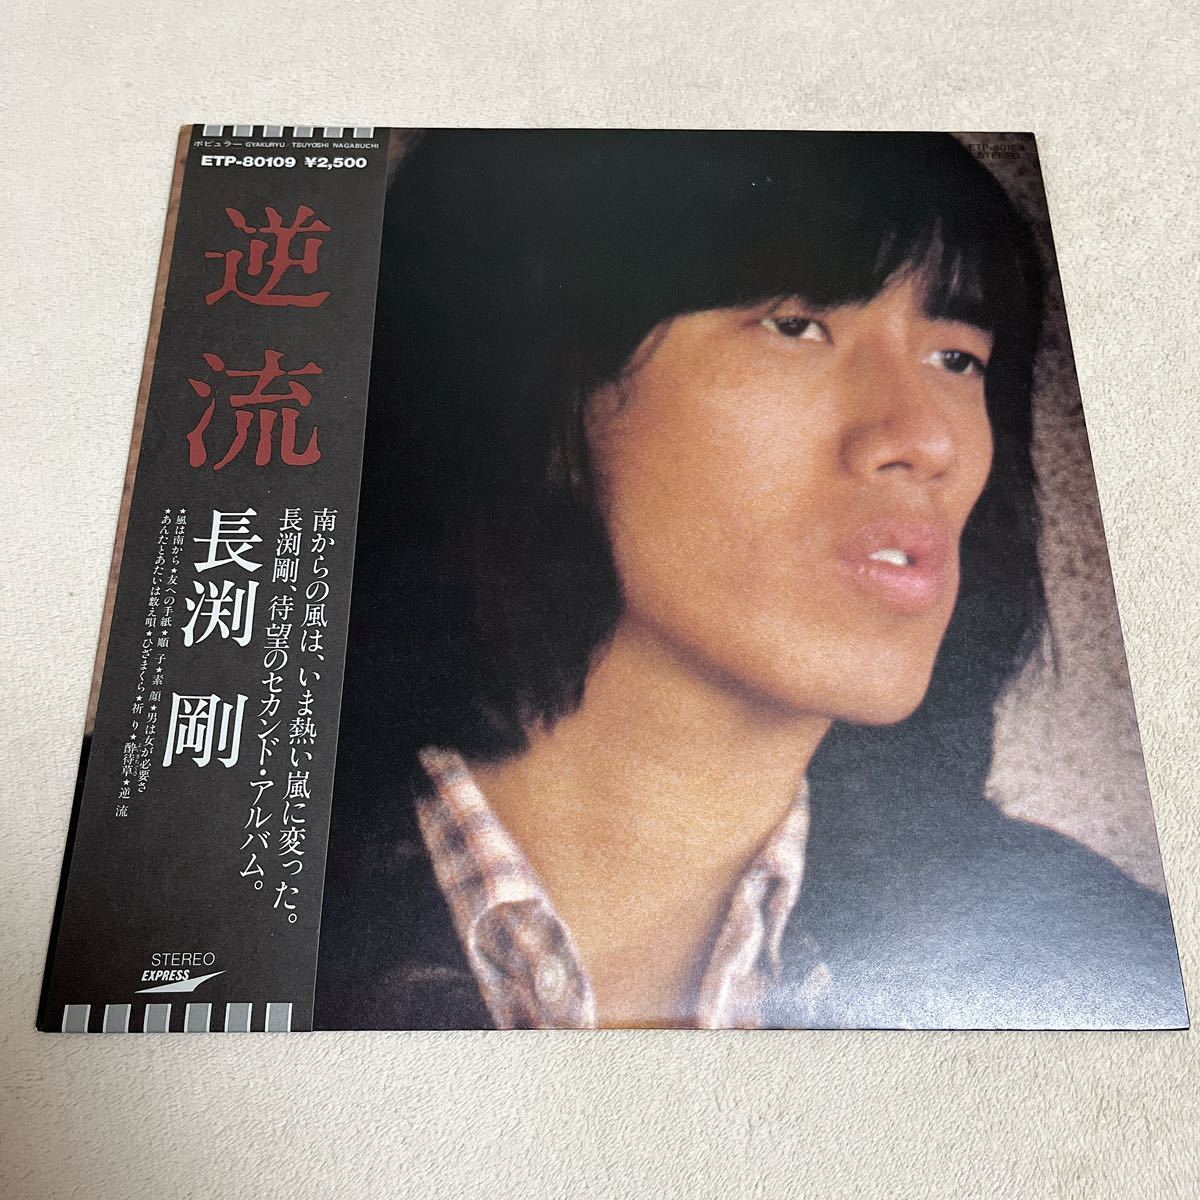 [ with belt ] Nagabuchi Tsuyoshi reverse .. to letter man is woman . necessary . knee ...TSUYOSHI NAGABUCHI / LP record / ETP-80109 / liner have / peace mono 